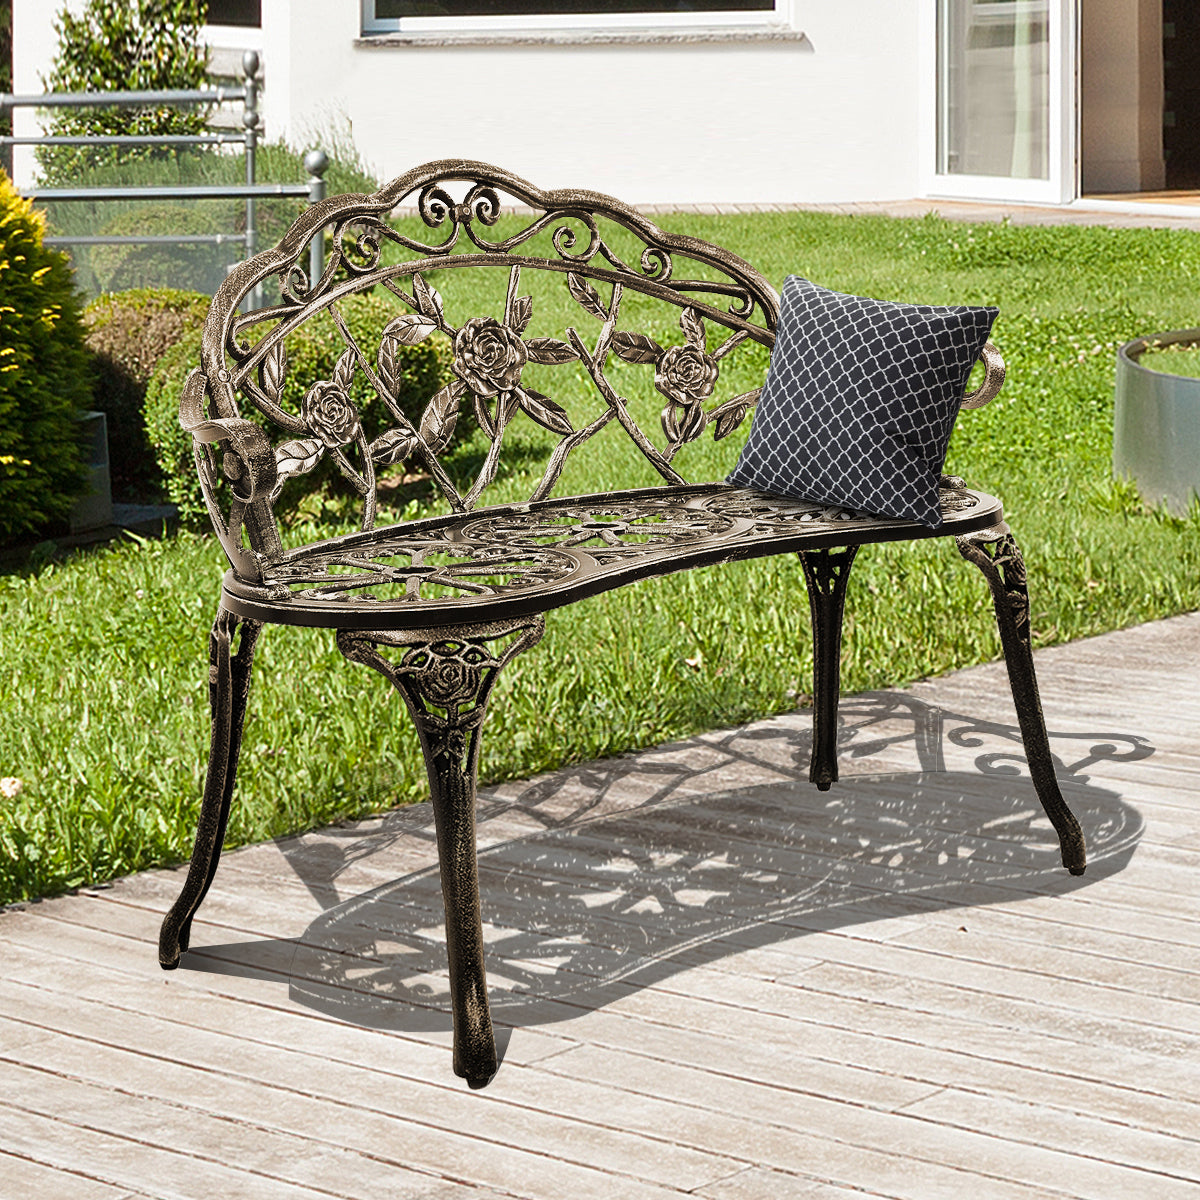 Outdoor Garden Bench Iron Patio Benches for Outdoors, Rose Antique Style